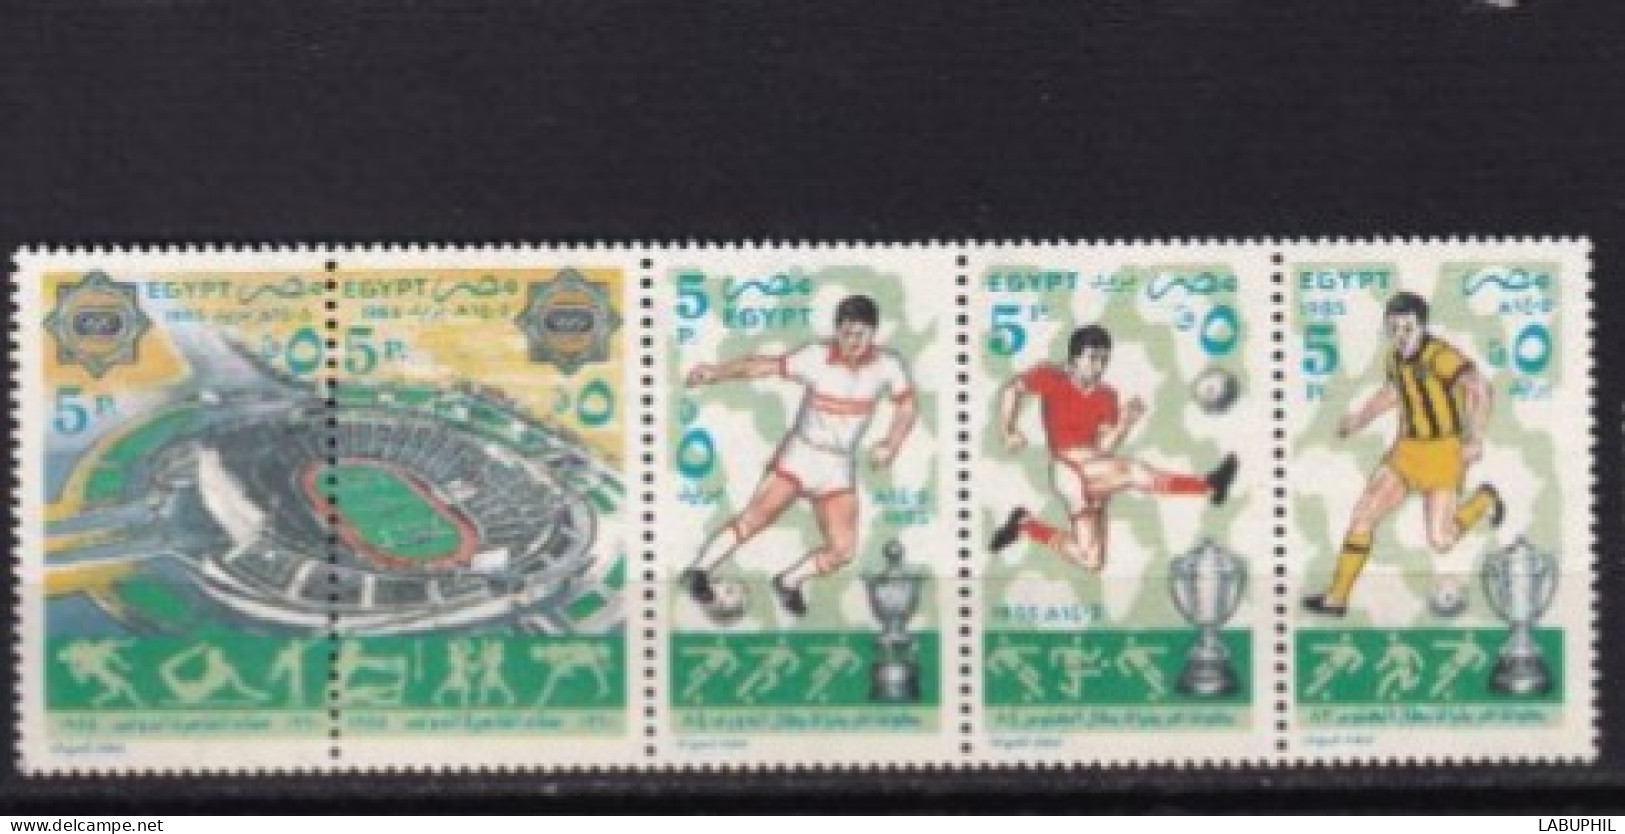 EGYPTE MNH ** 1985 Sport Foot - Nuevos